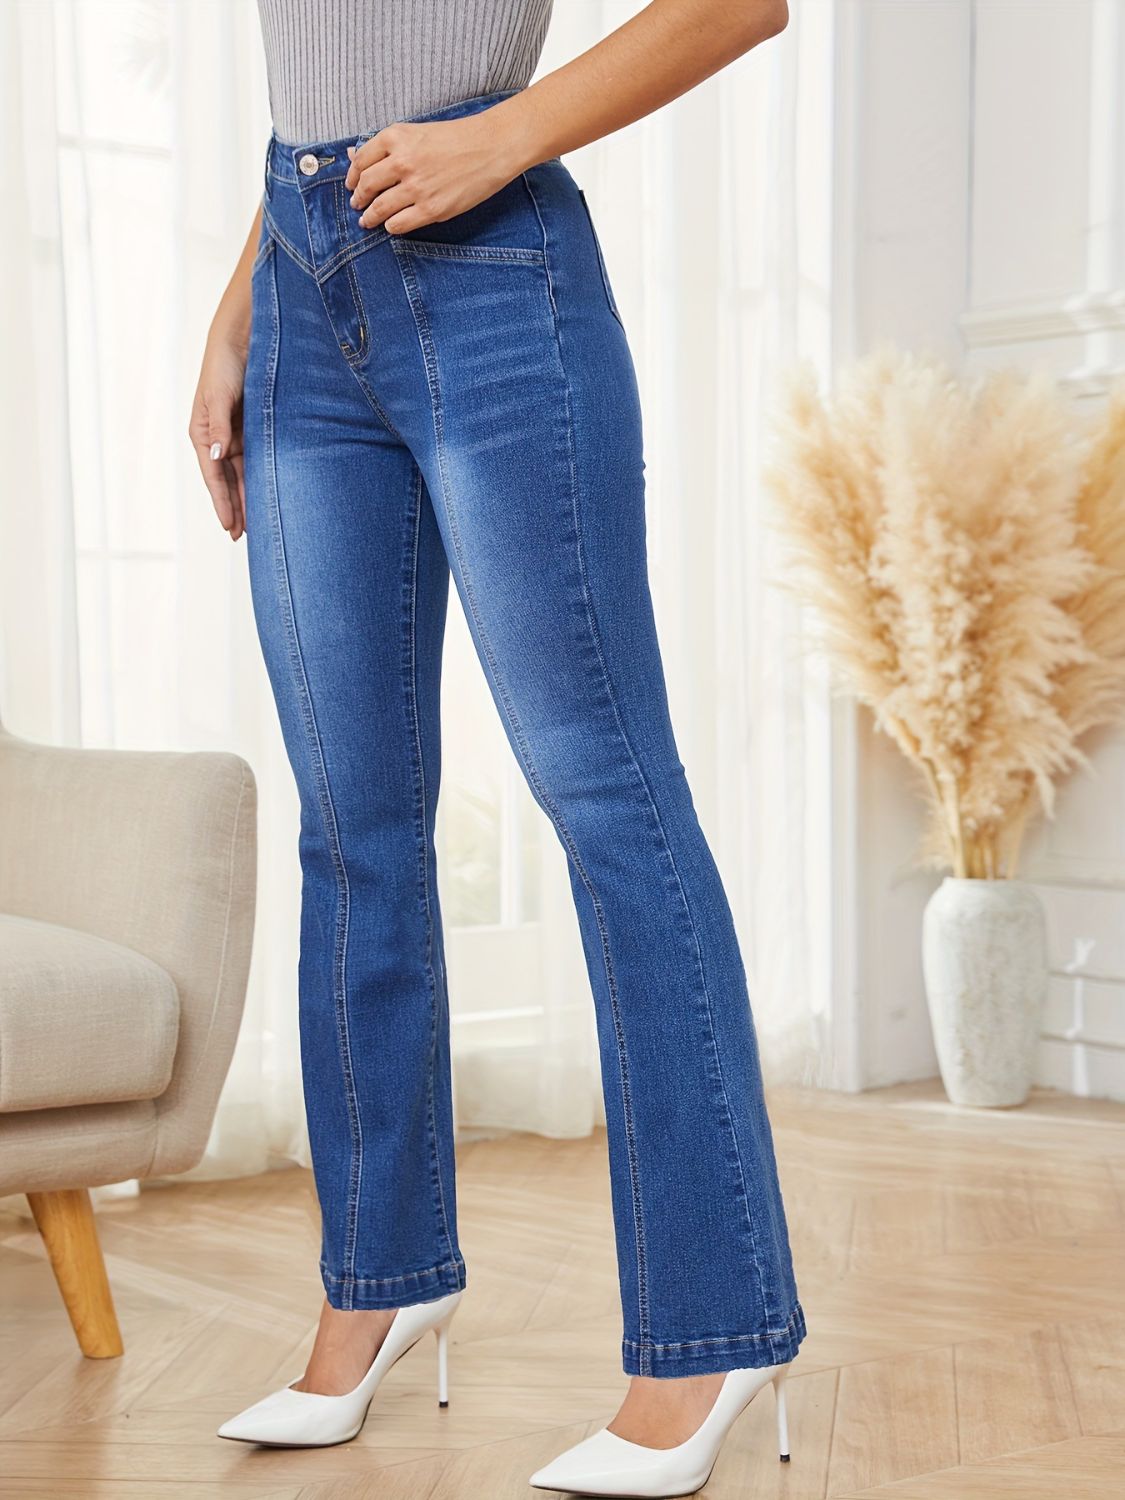 High Waist Bootcut Jeans with Pockets Bottom wear